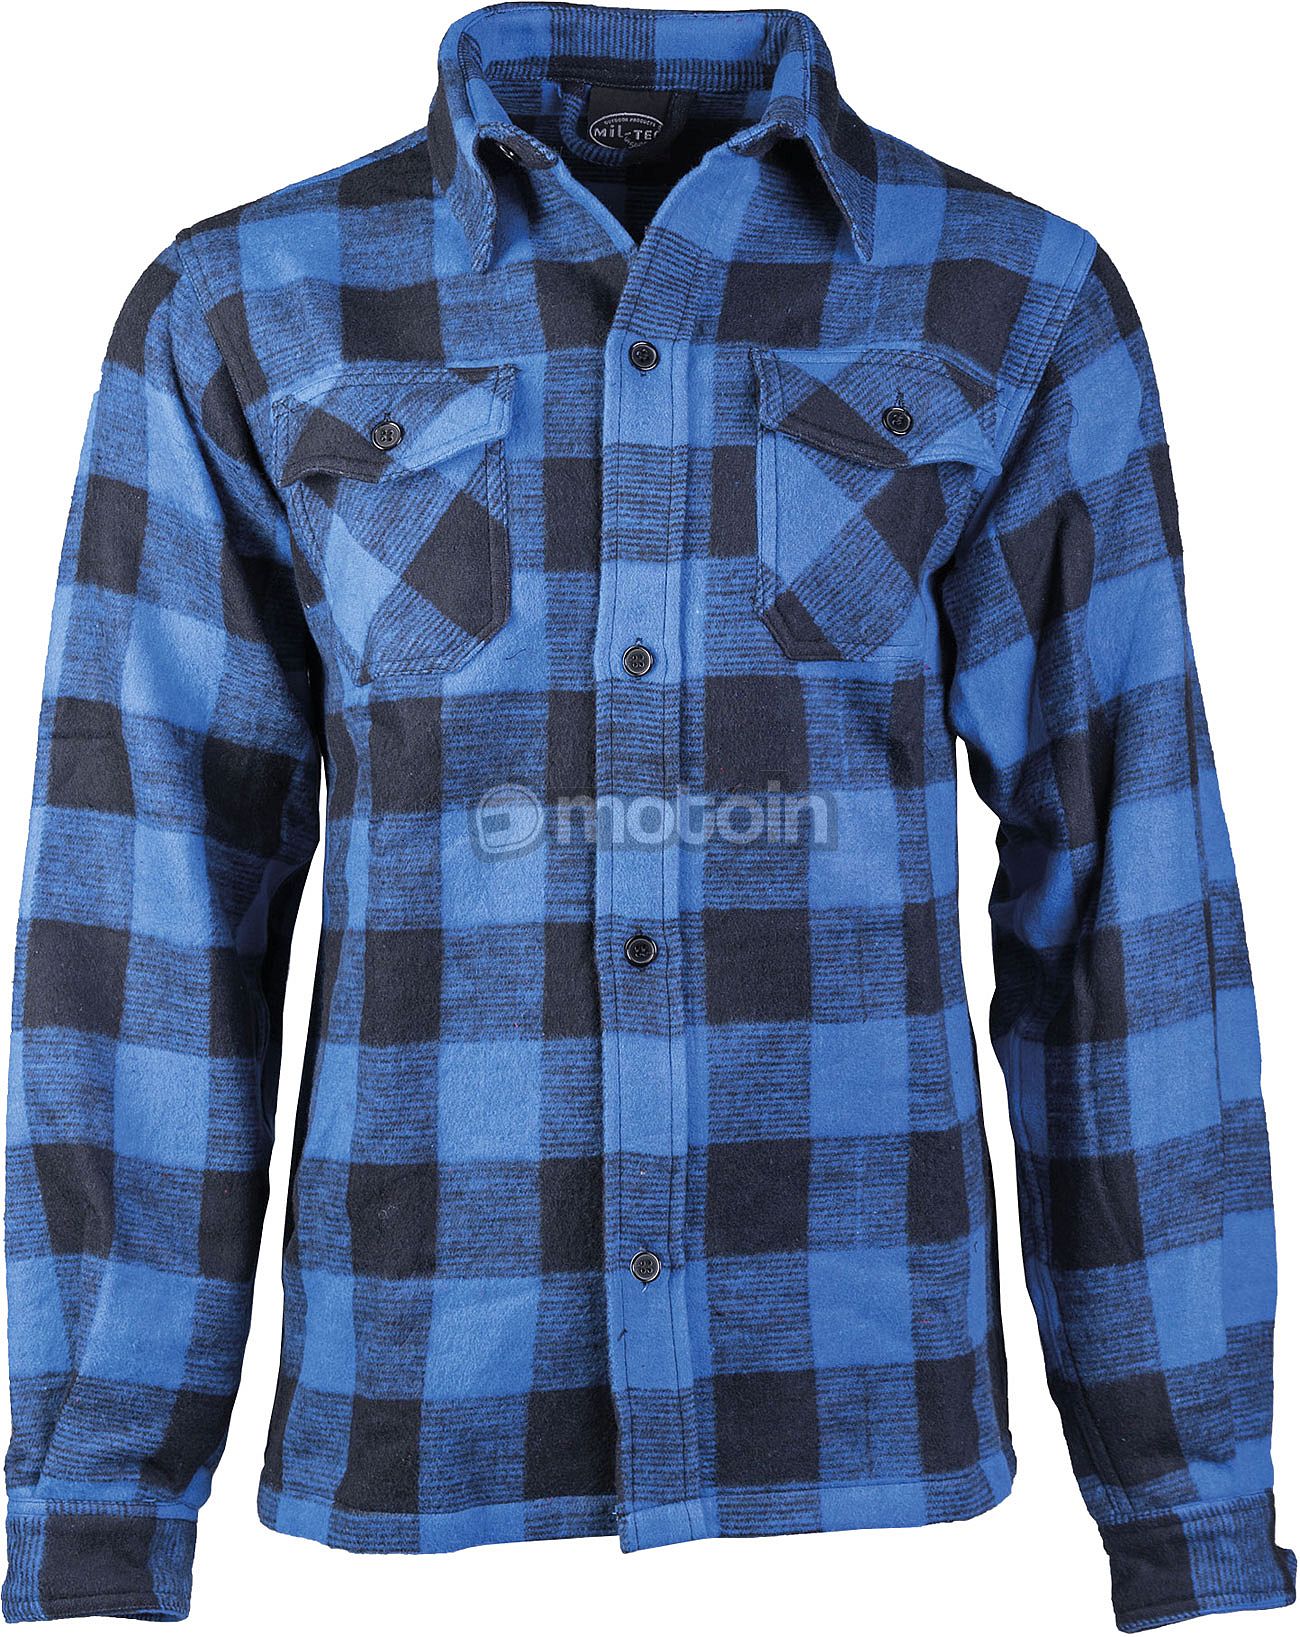 Mil-Tec Lumberjack II, shirt/textile jacket